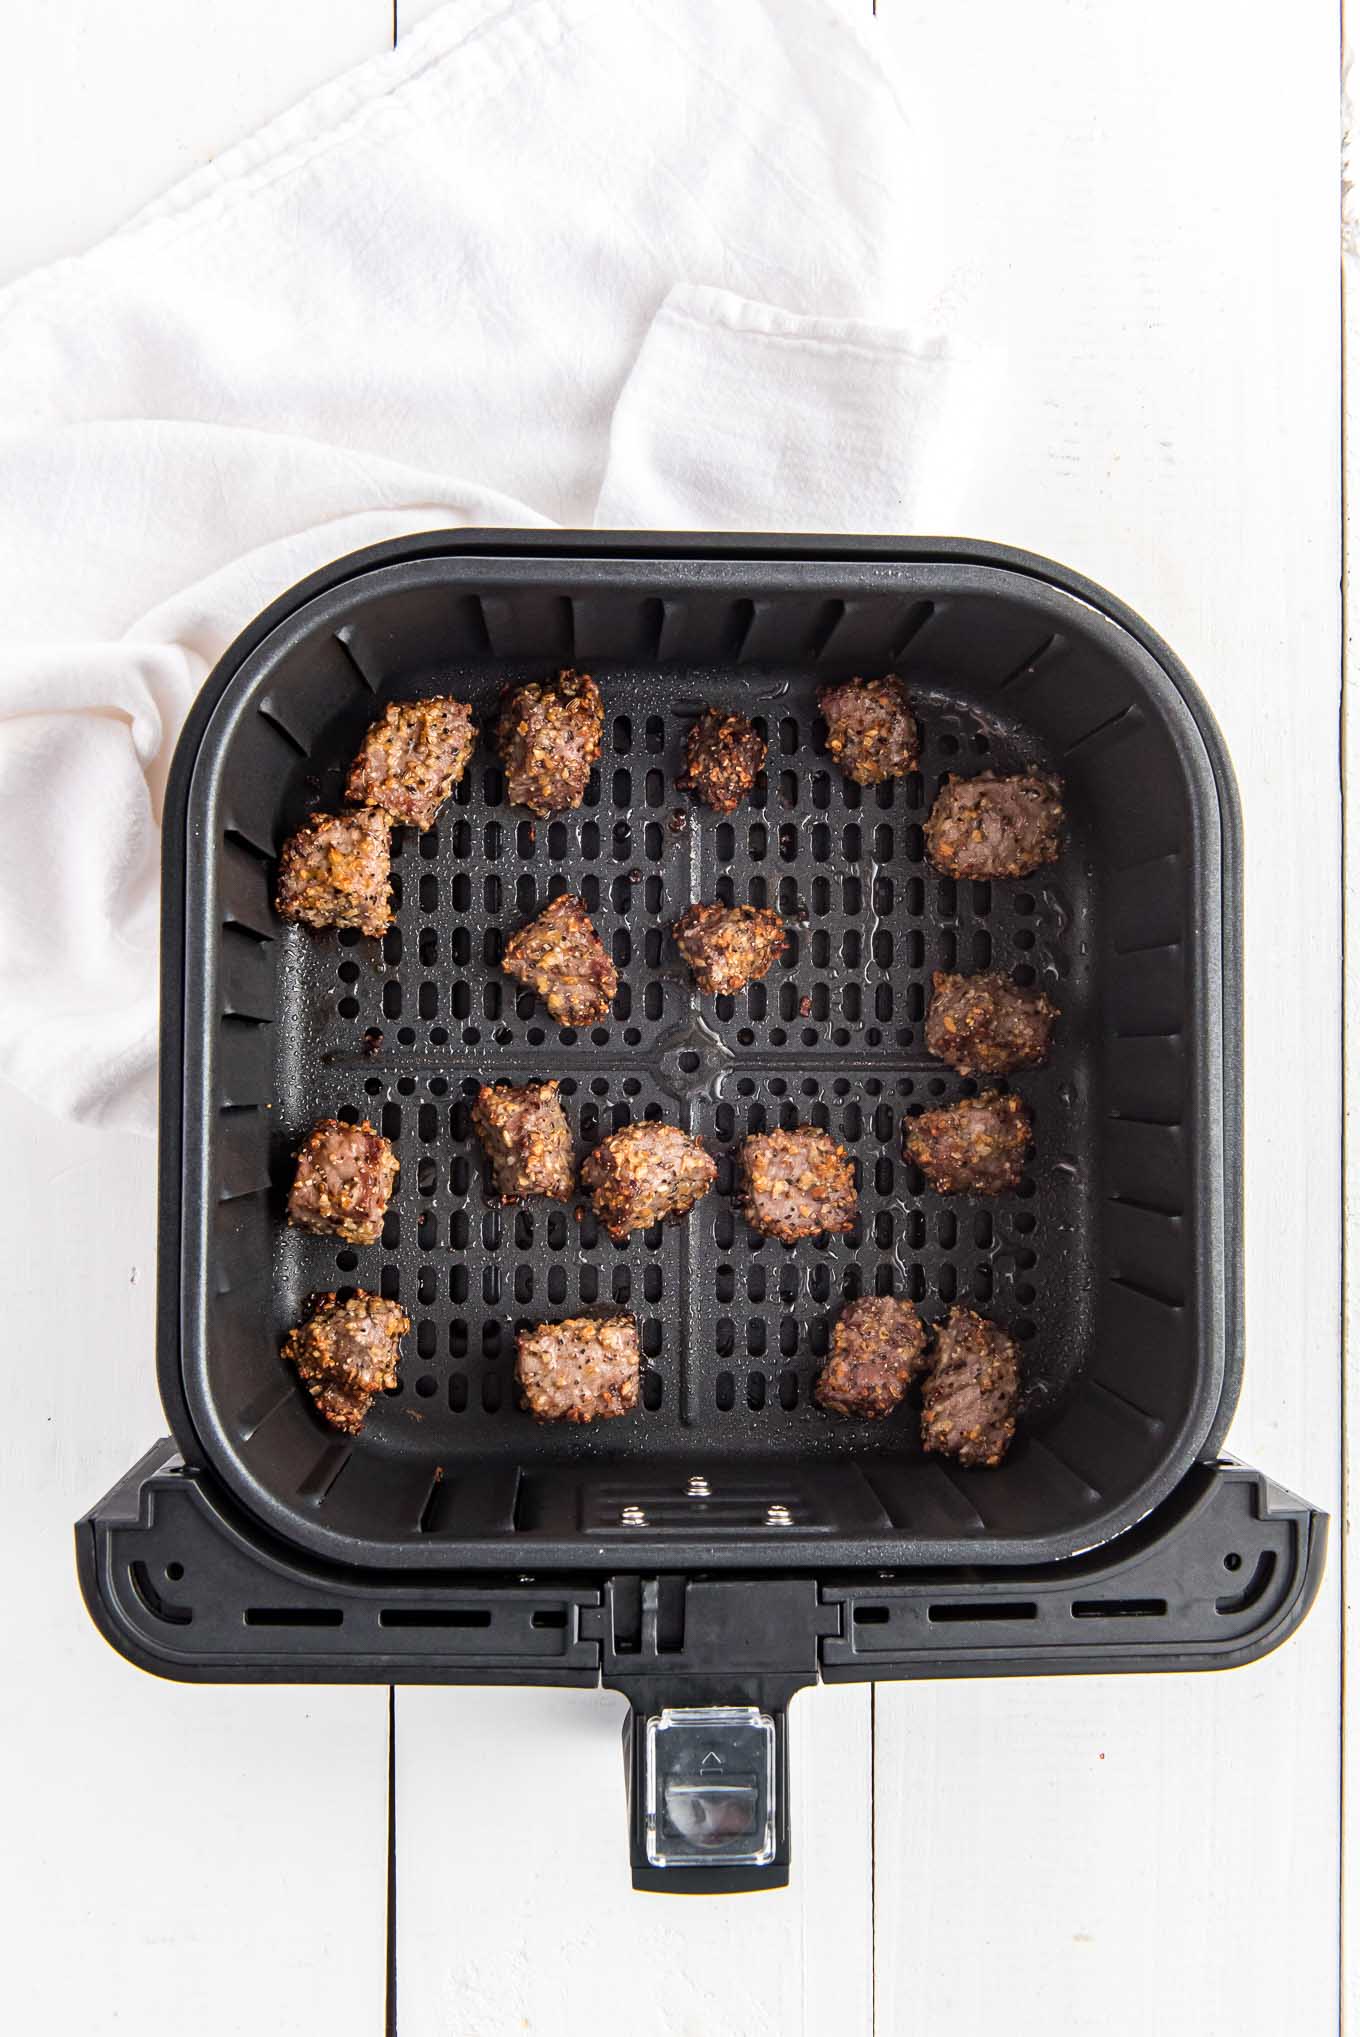 Steak bites in the air fryer basket after cooking.